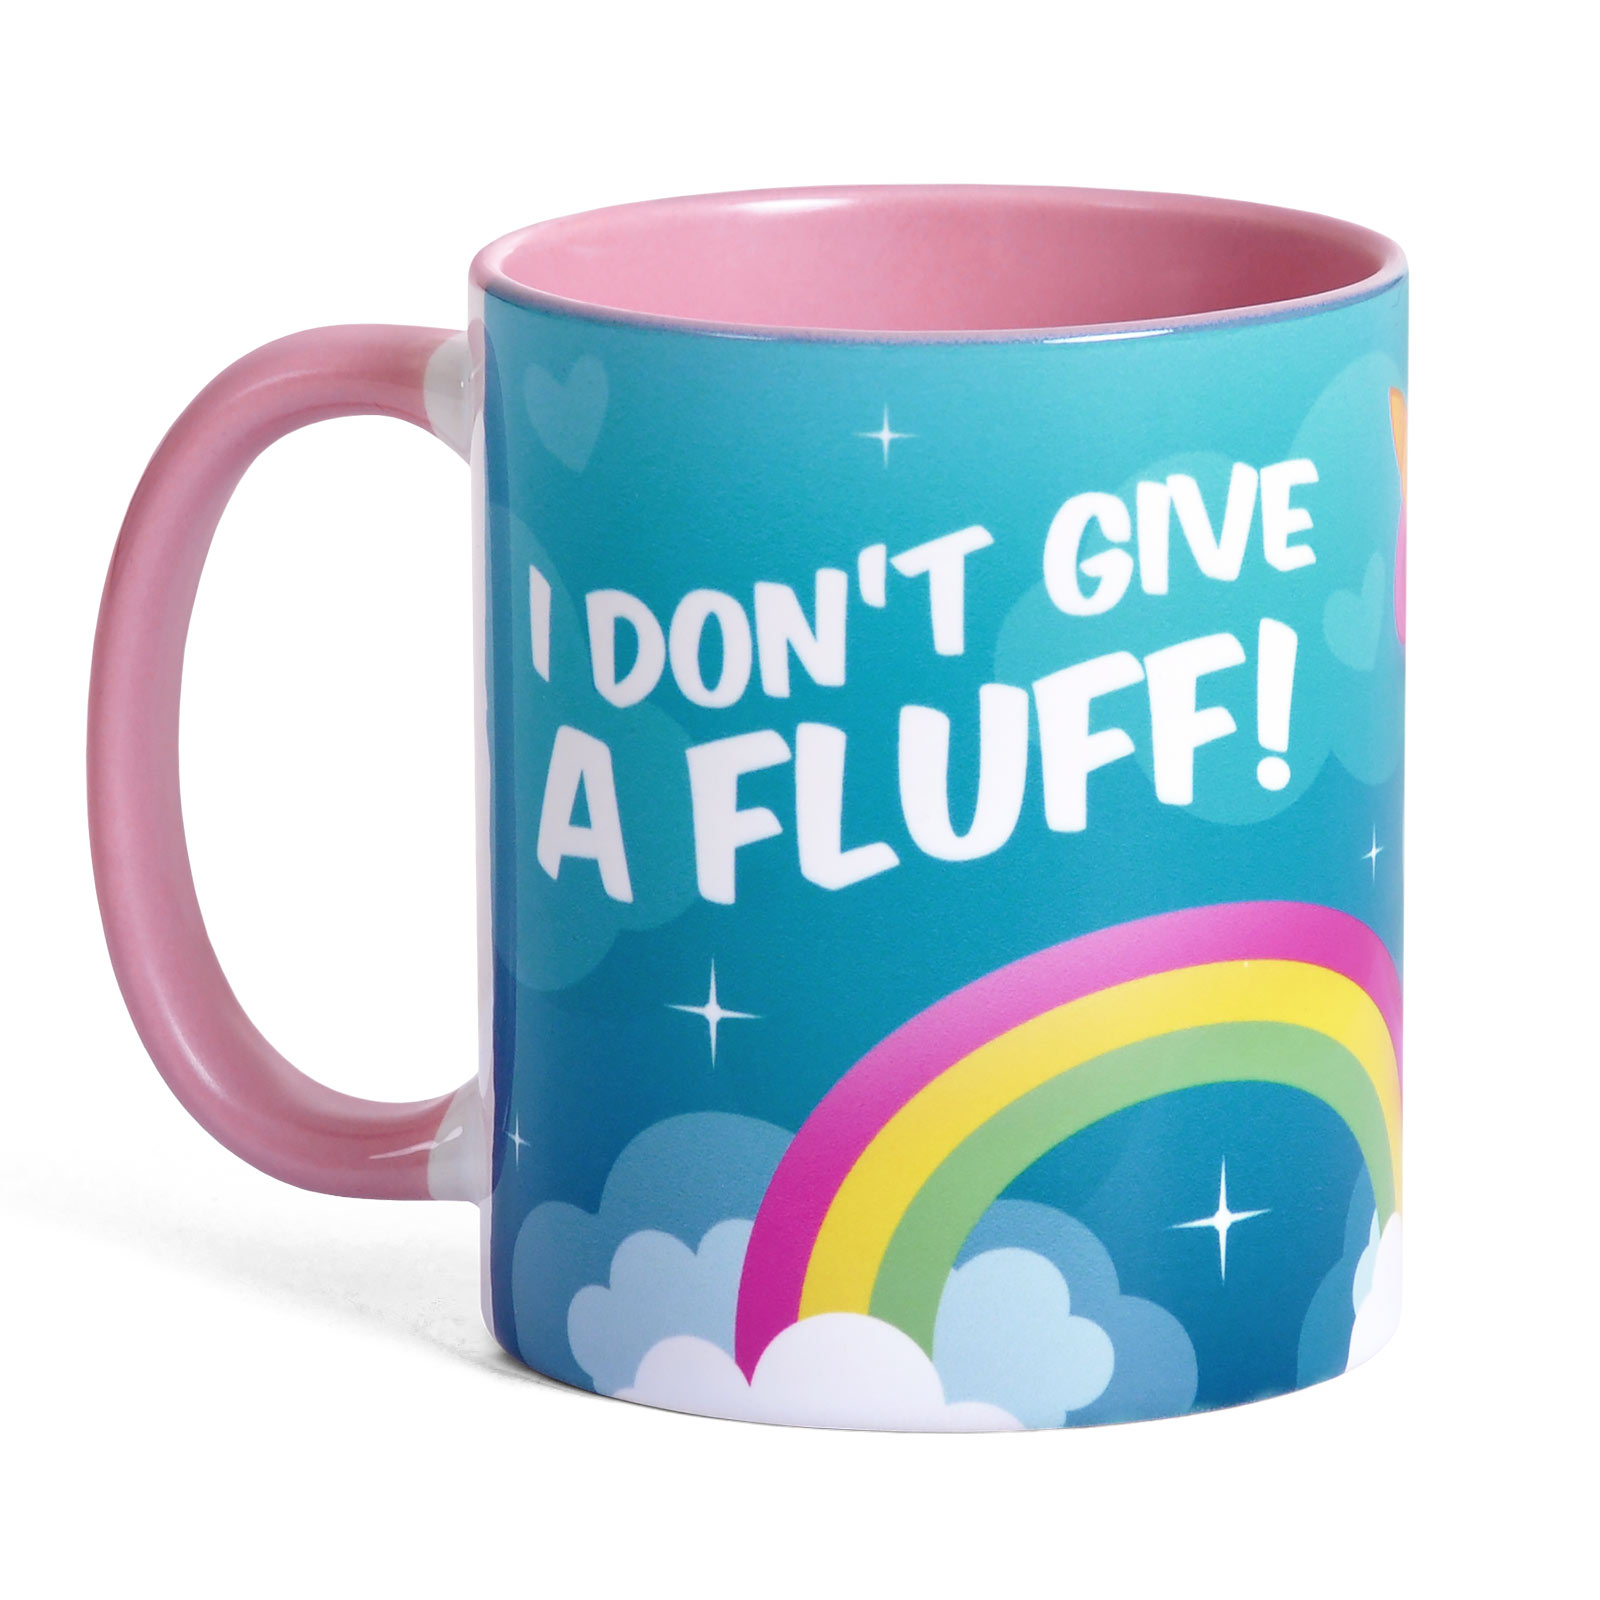 Fluffy Unicorn cup